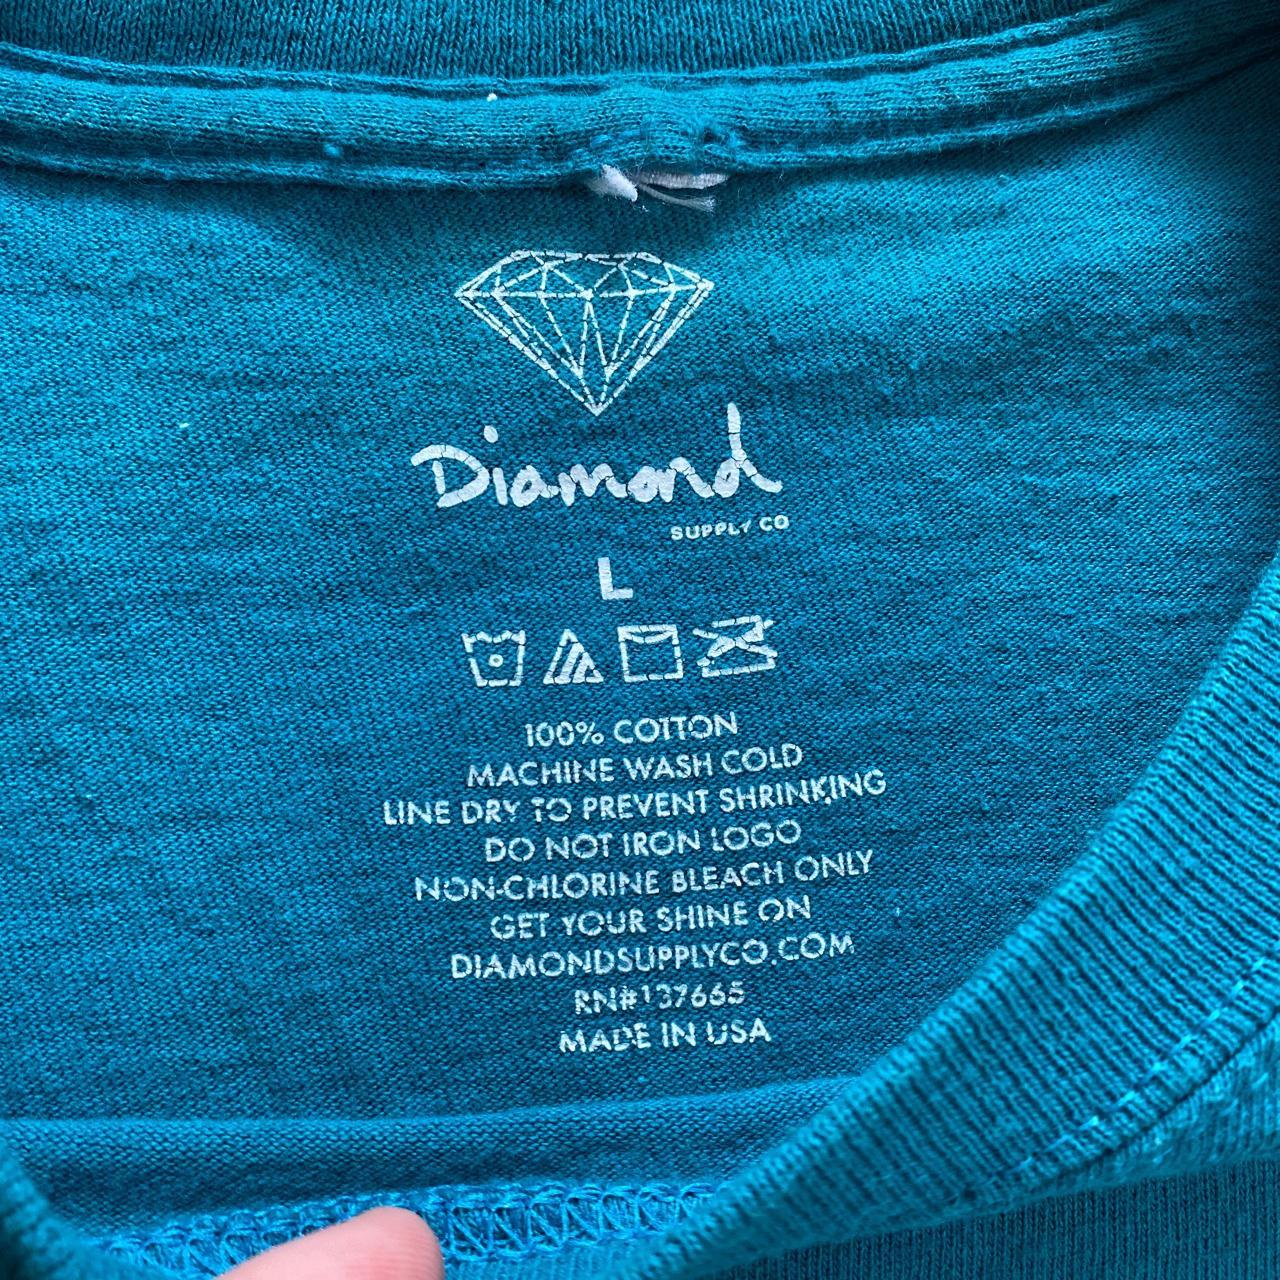 diamond supply co logo blue